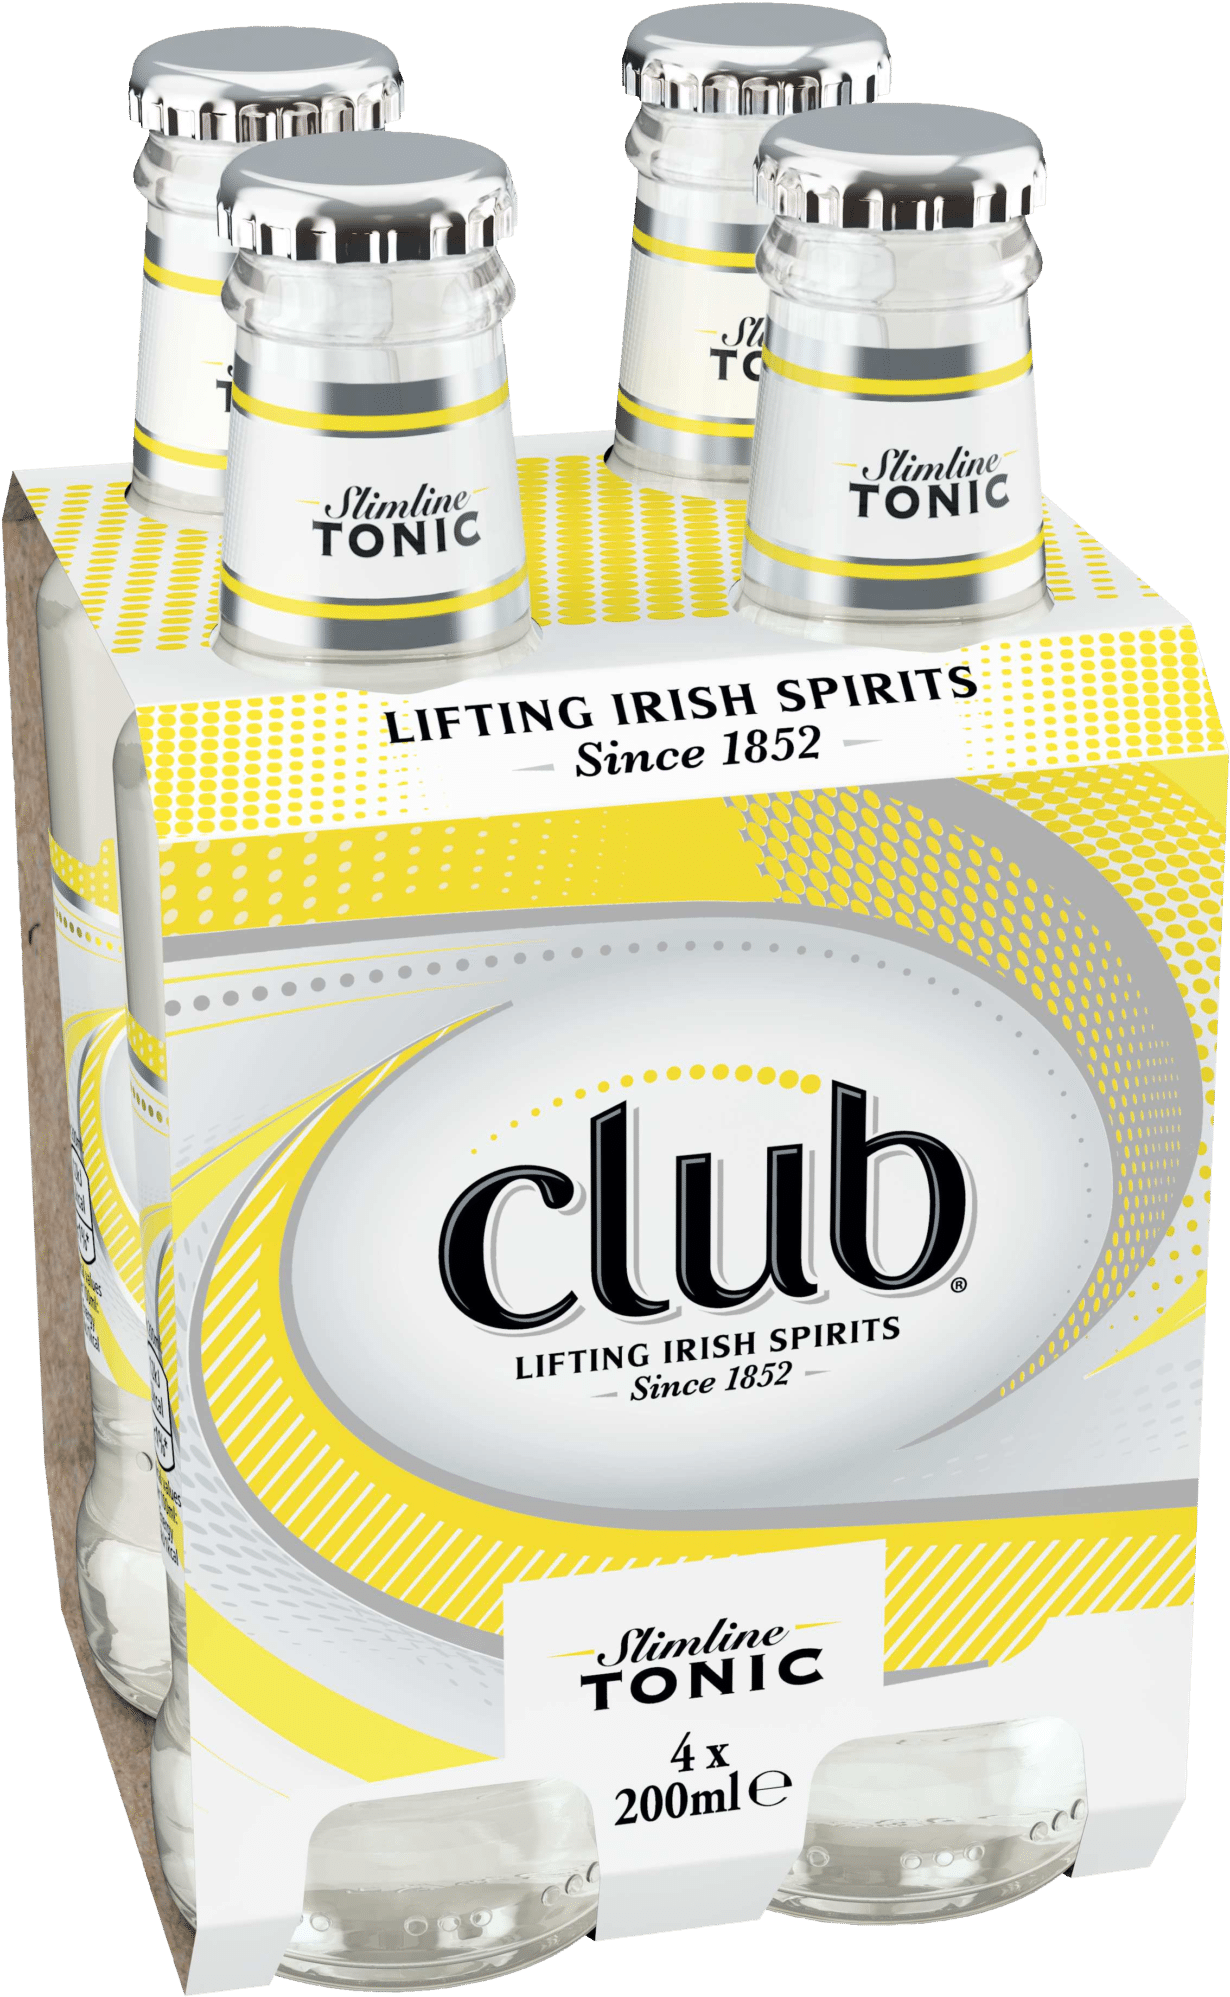 Club Slimline Tonic Pack Image